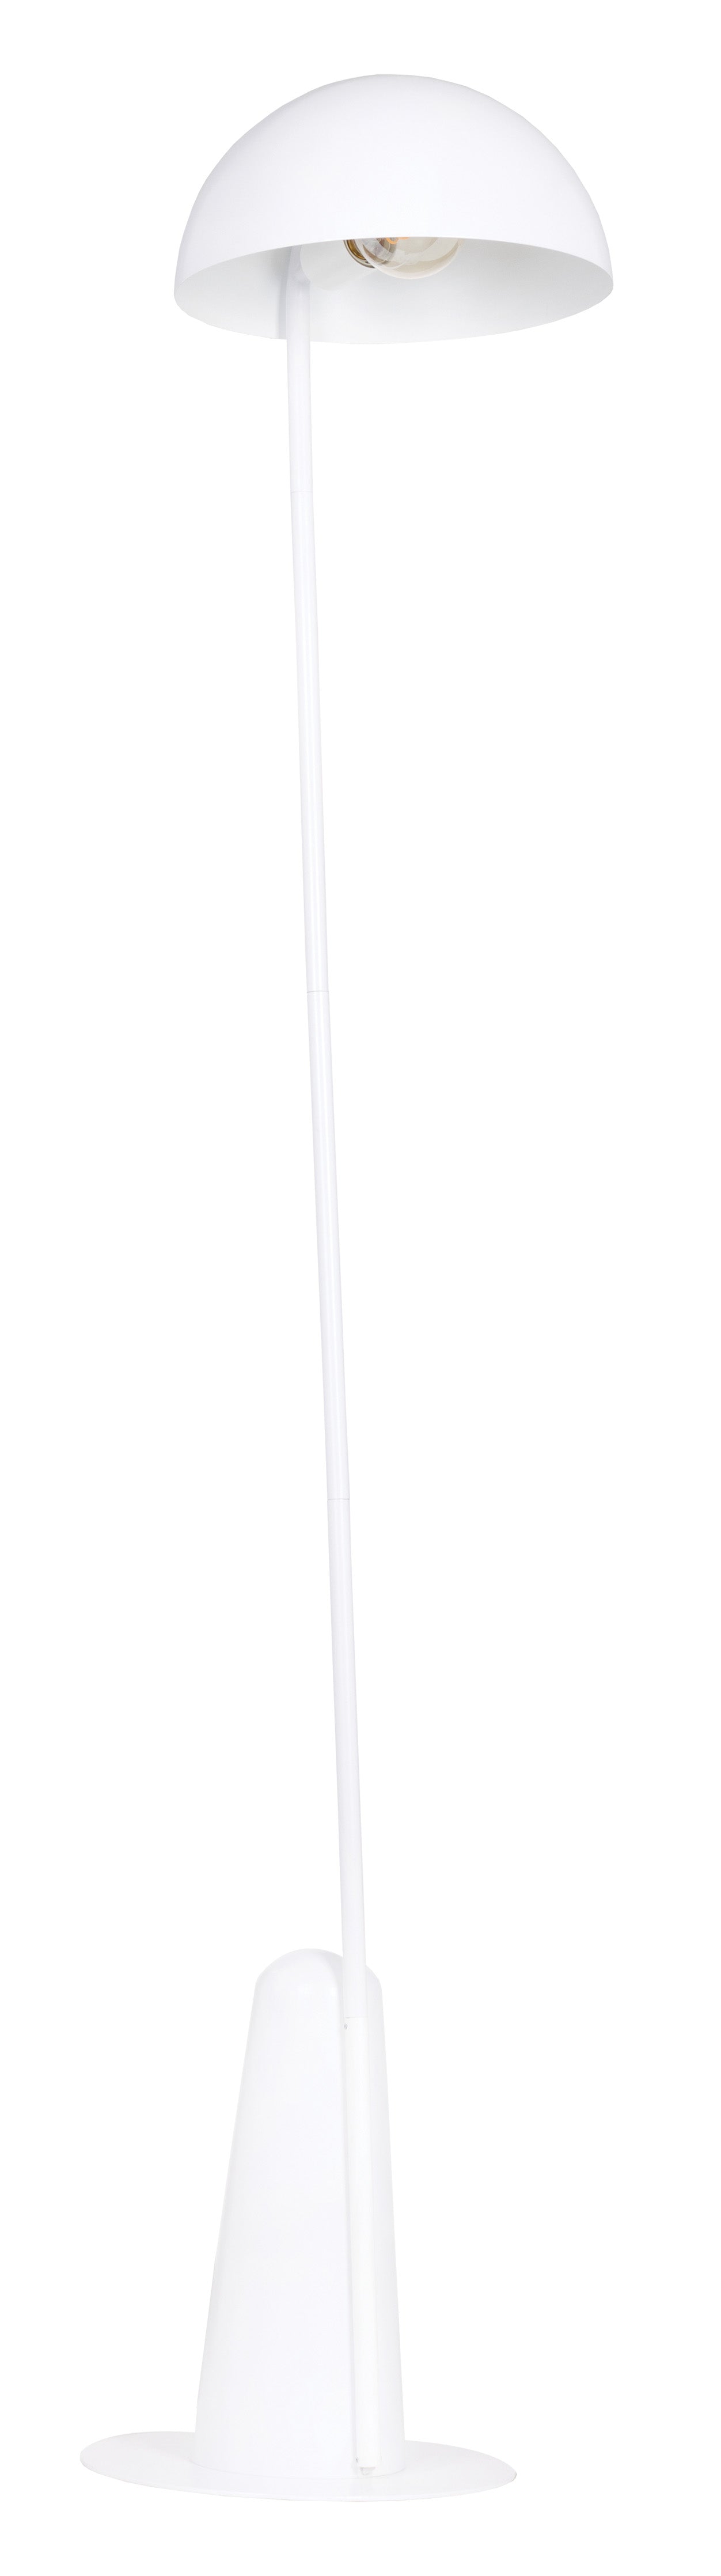 ARANZOLA Lampe sur pied Blanc - 206035A | EGLO